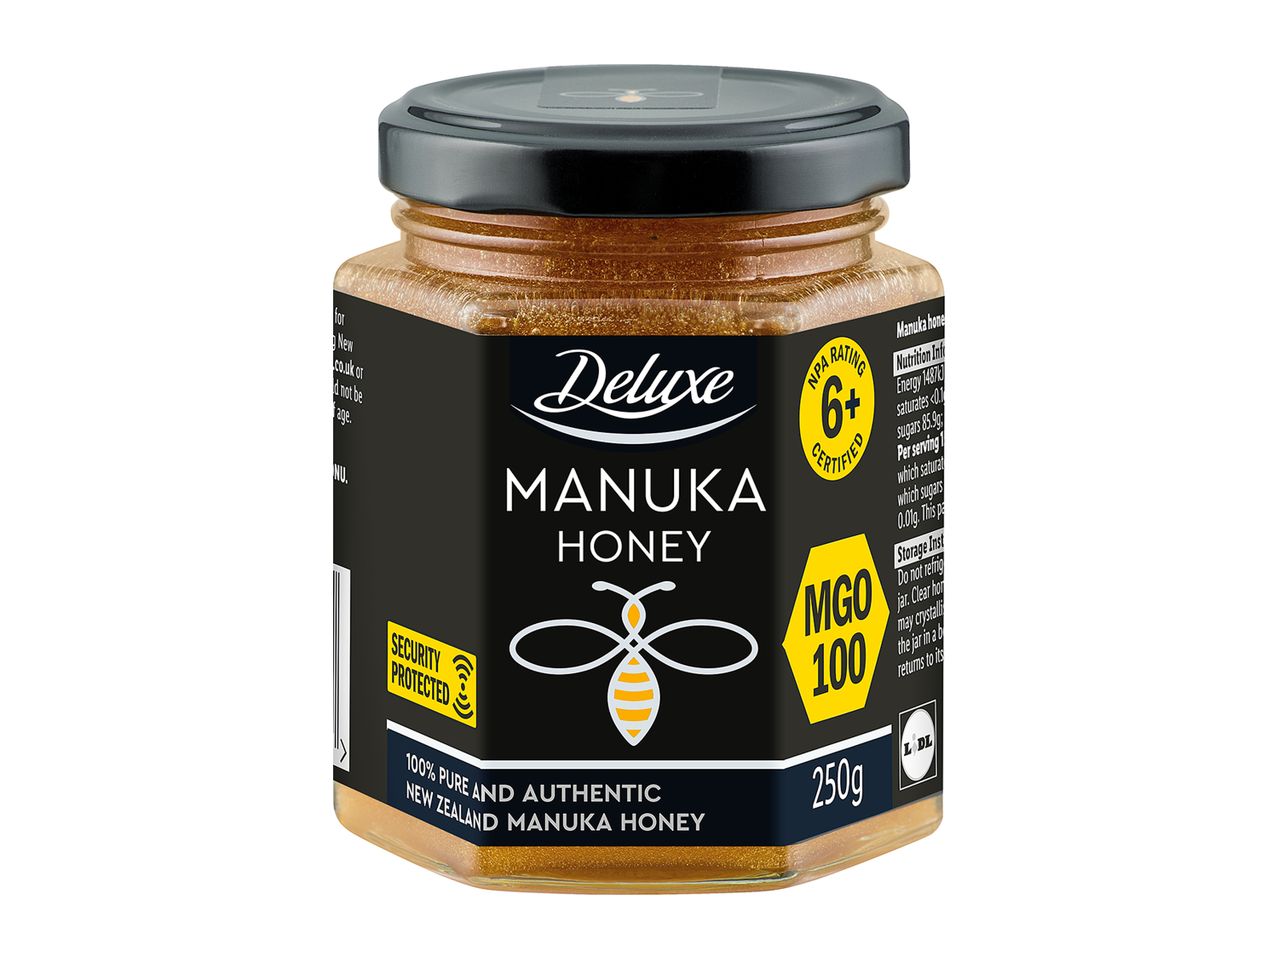 Go to full screen view: Deluxe Manuka Honey - Image 1